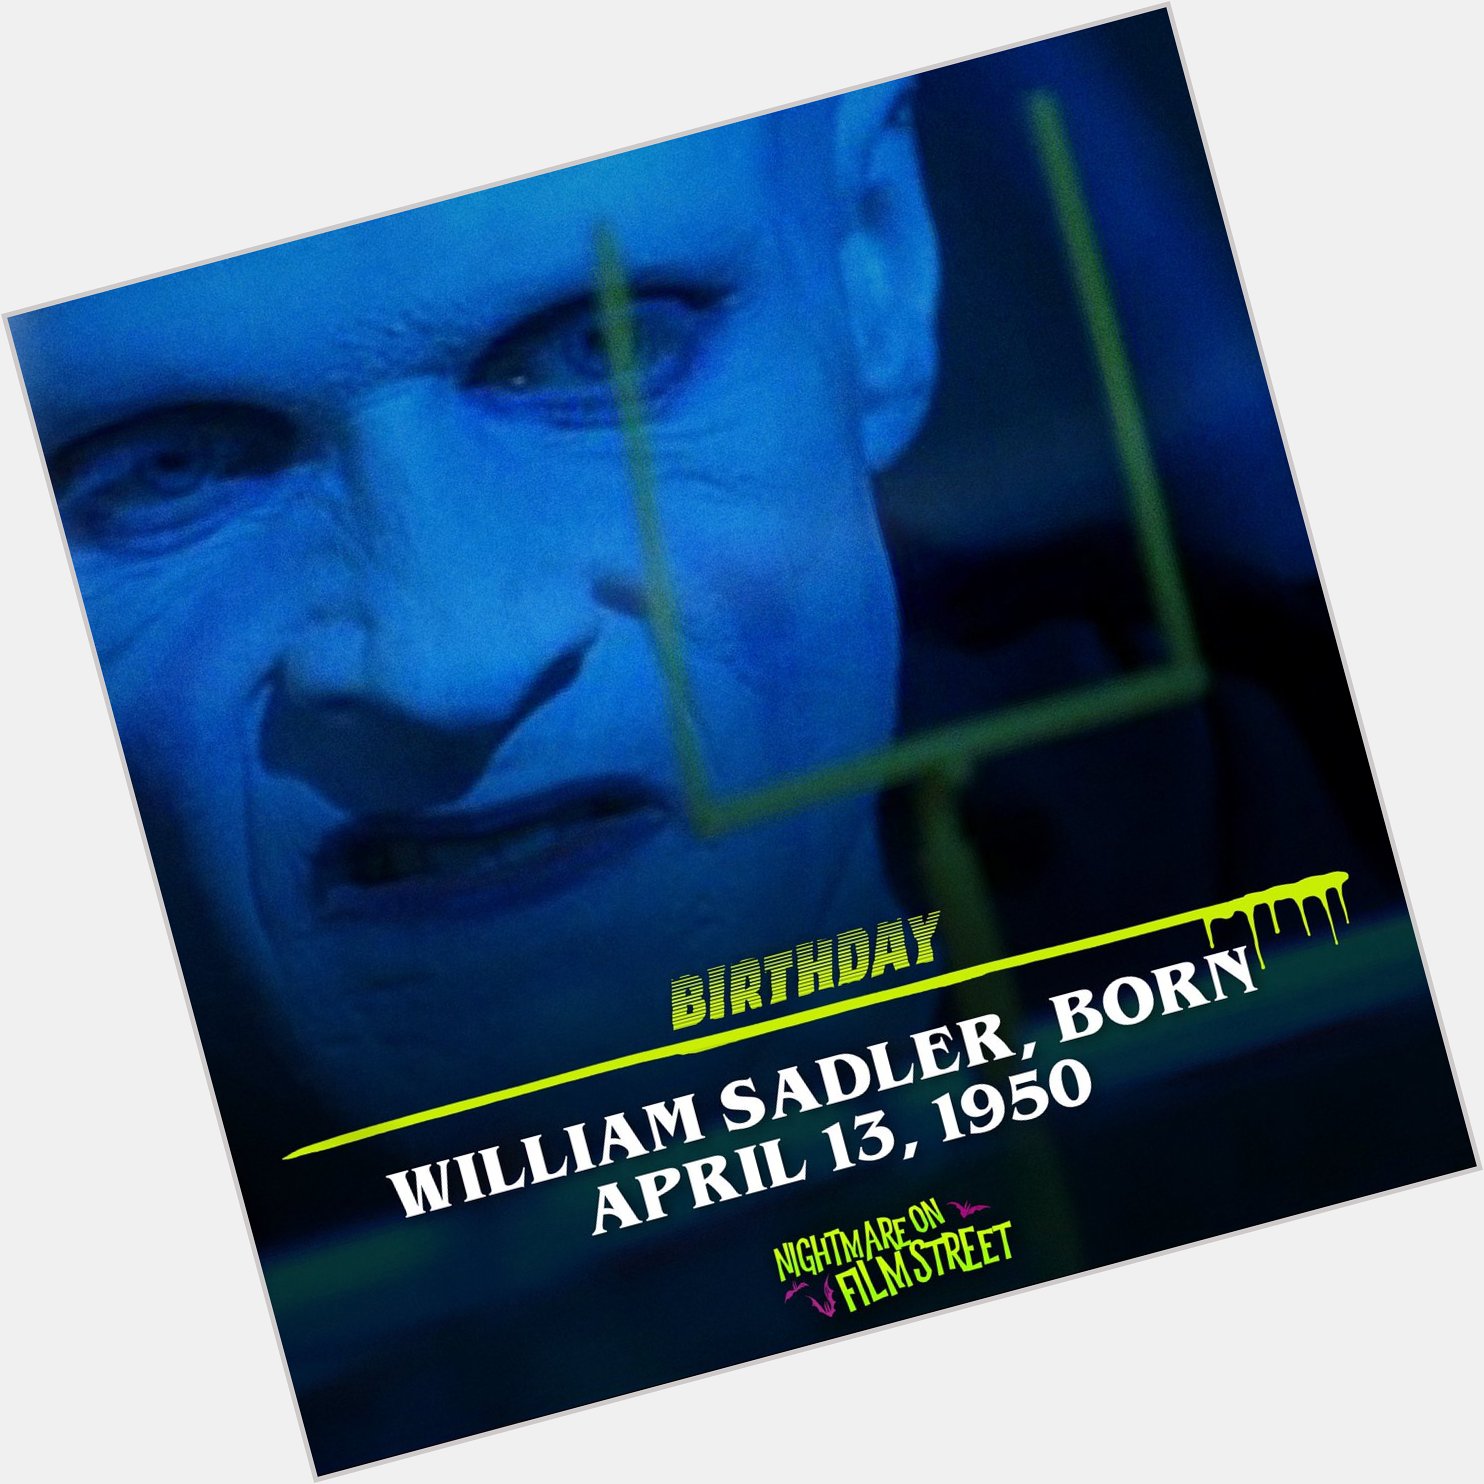 Happy Birthday to WILLIAM SADLER - in 1950! 